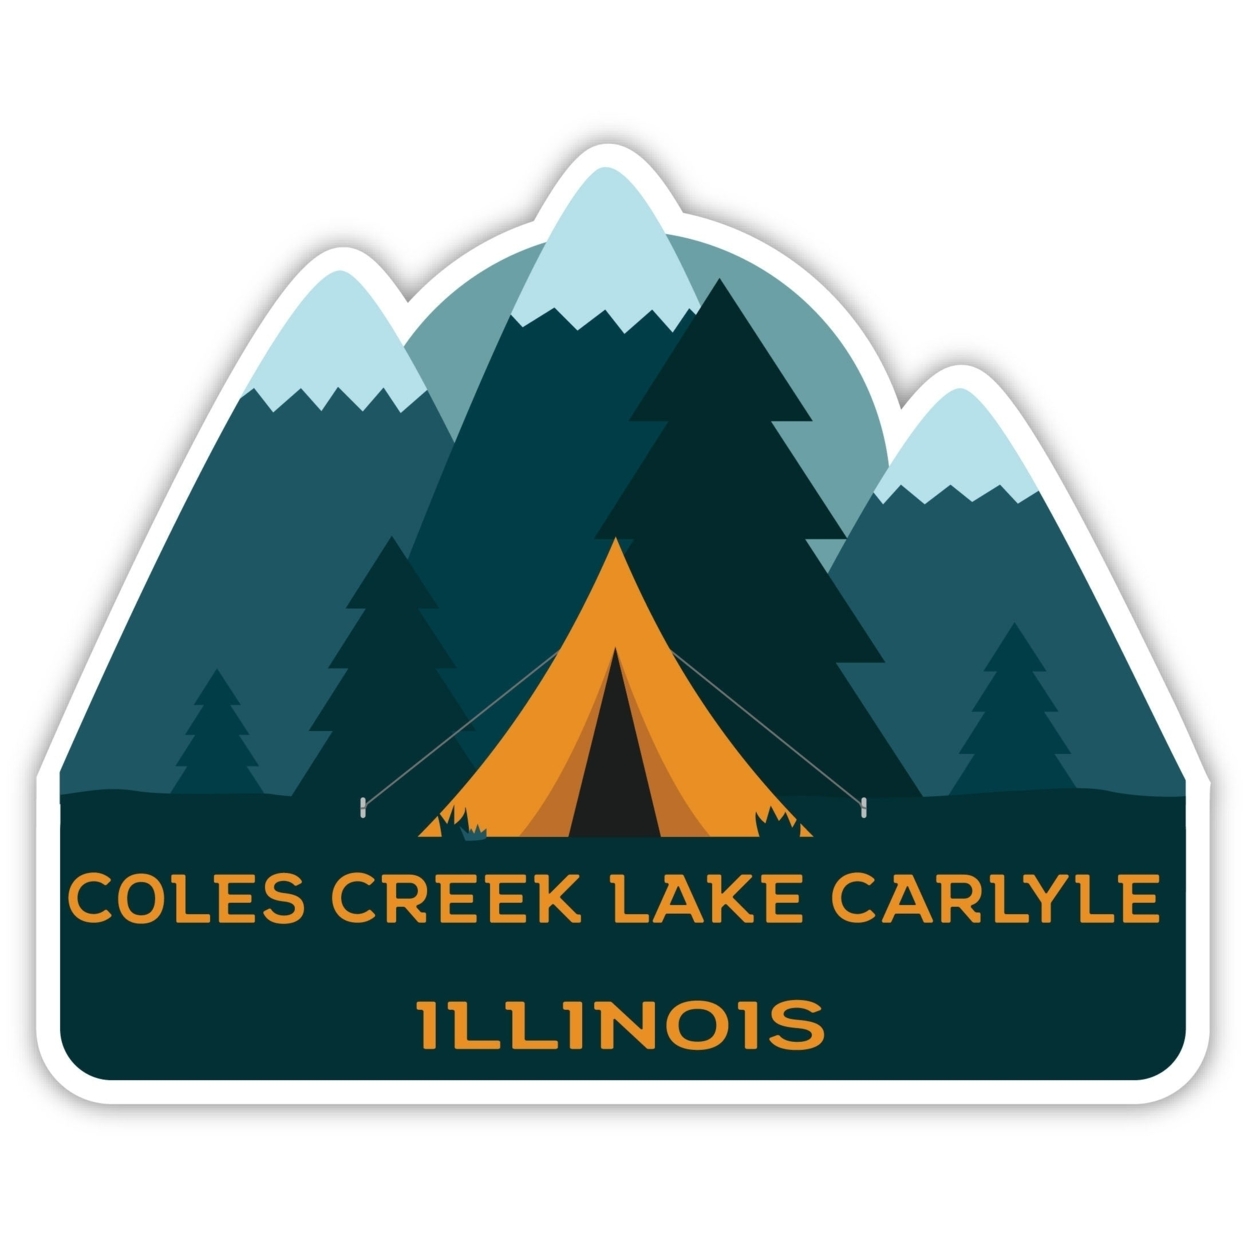 Coles Creek Lake Carlyle Illinois Souvenir Decorative Stickers (Choose Theme And Size) - Single Unit, 8-Inch, Tent